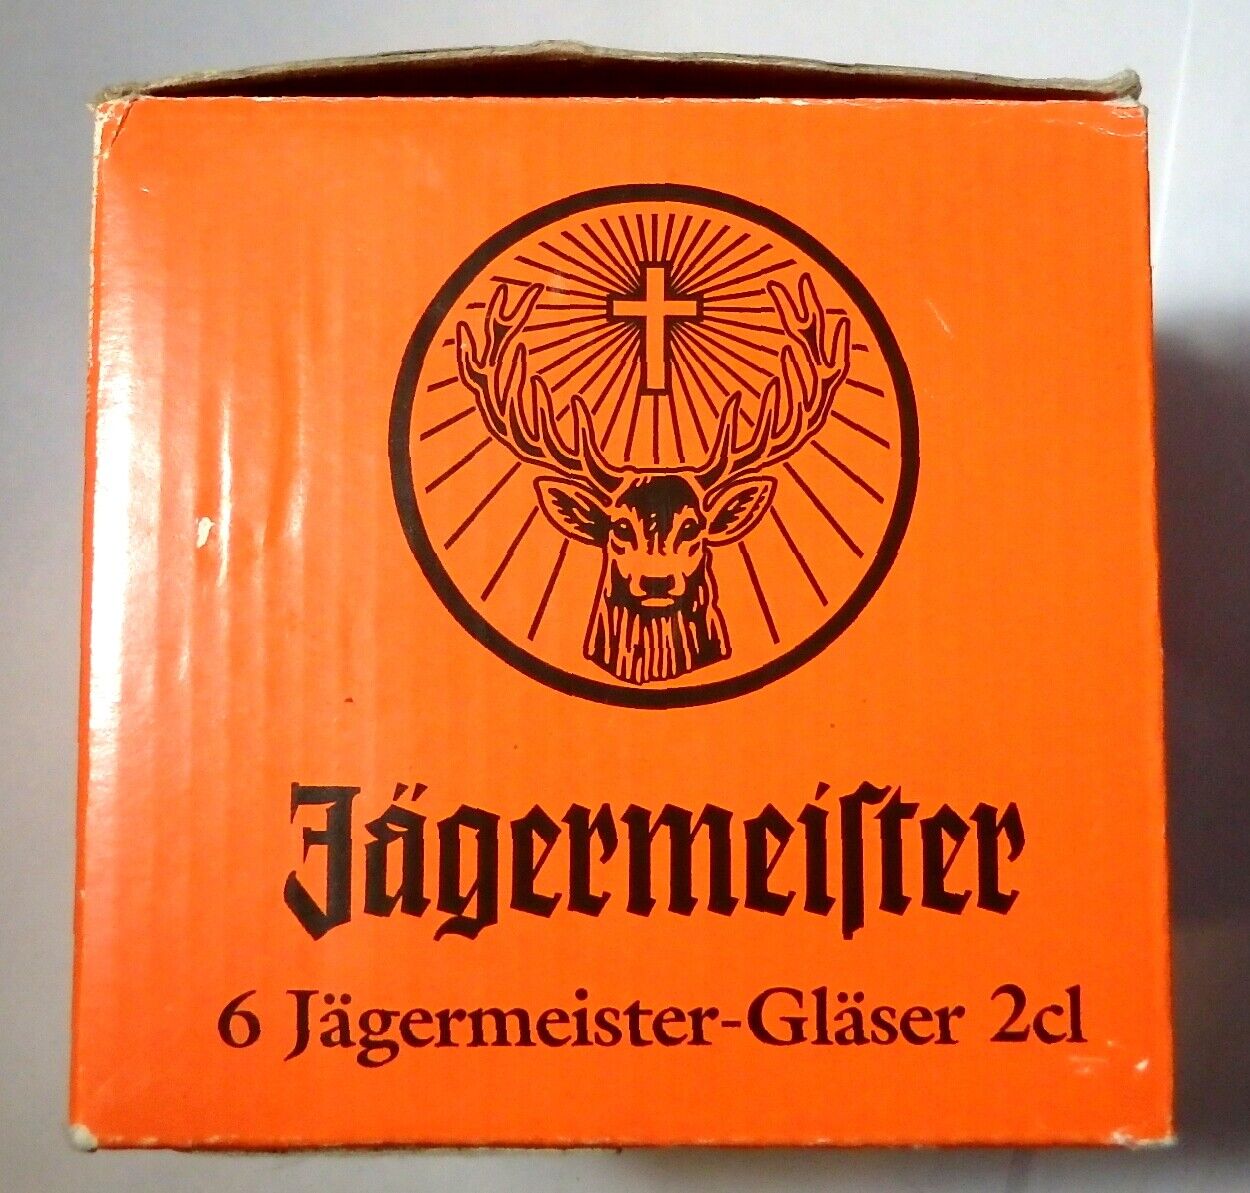 Jägermeister 6 pack of Shot Glasses - 2cl & 1oz - NEW in box - Real German